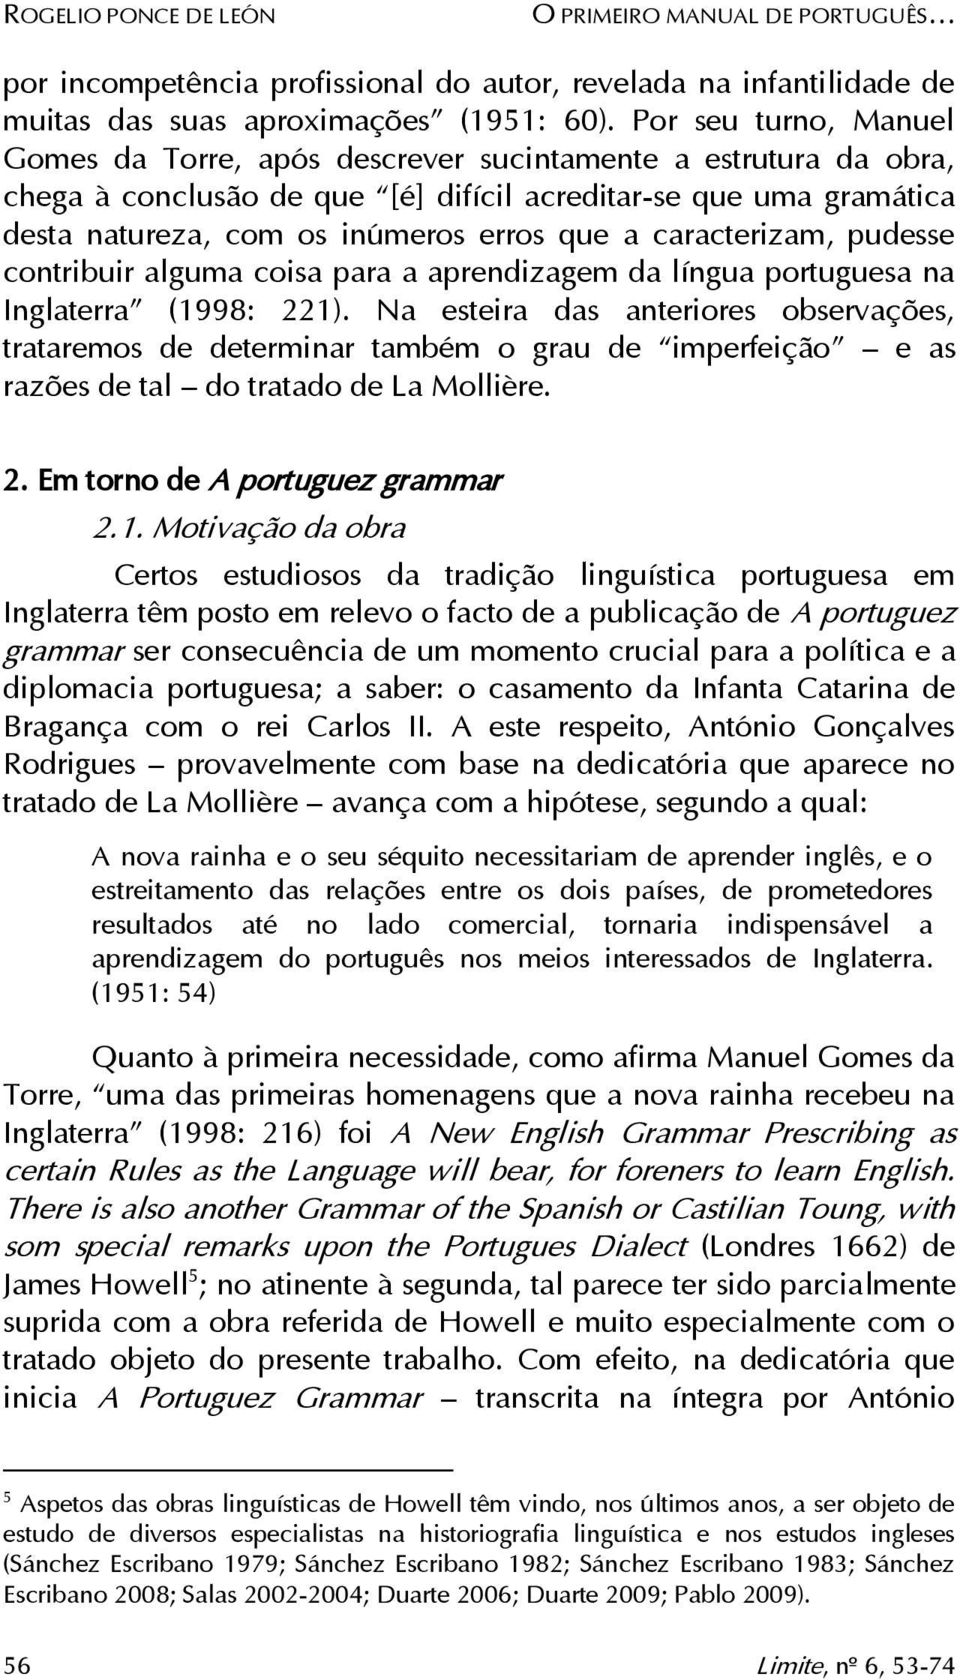 caracterizam, pudesse contribuir alguma coisa para a aprendizagem da língua portuguesa na Inglaterra (1998: 221).